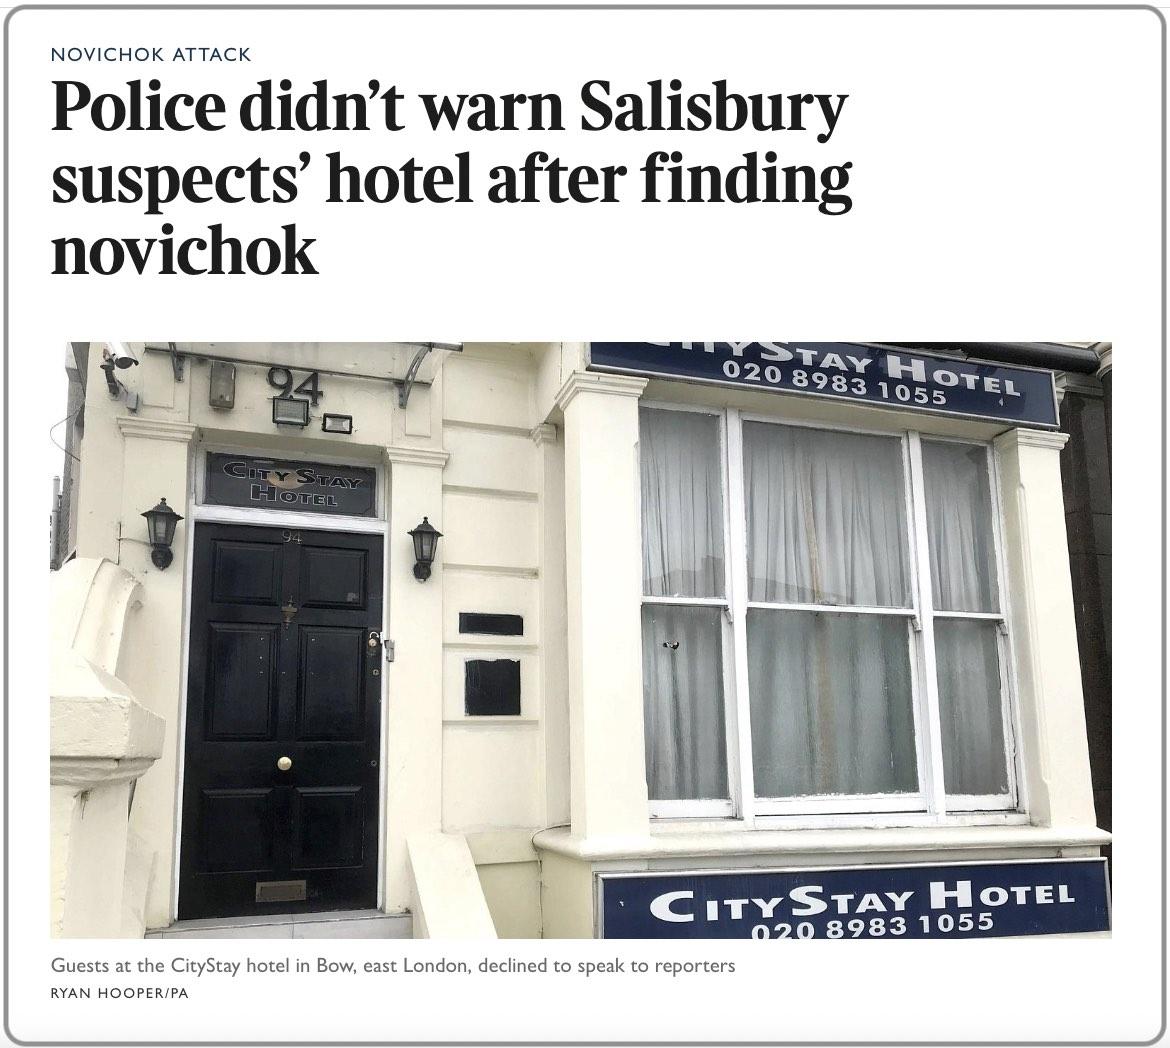 Police didn't warn hotel